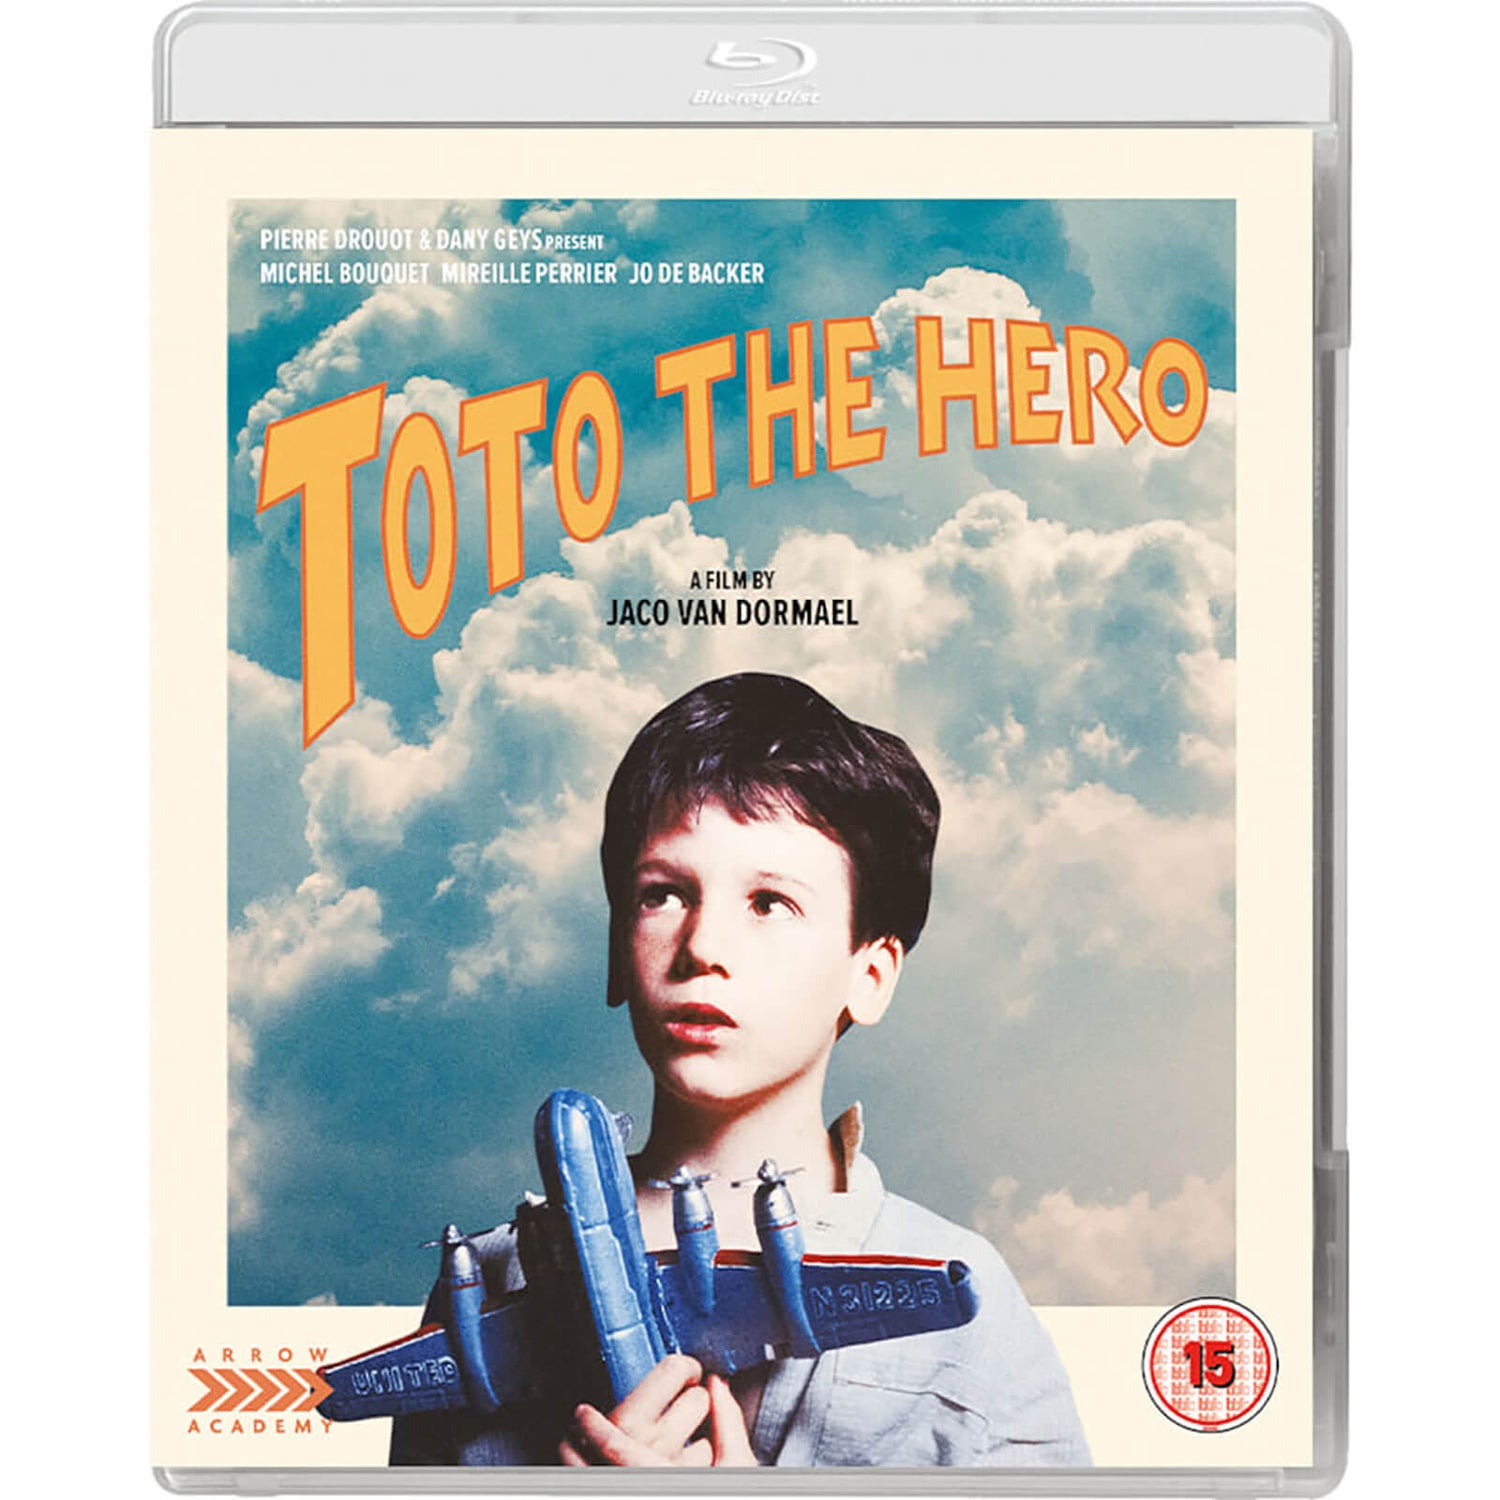 Toto der Held